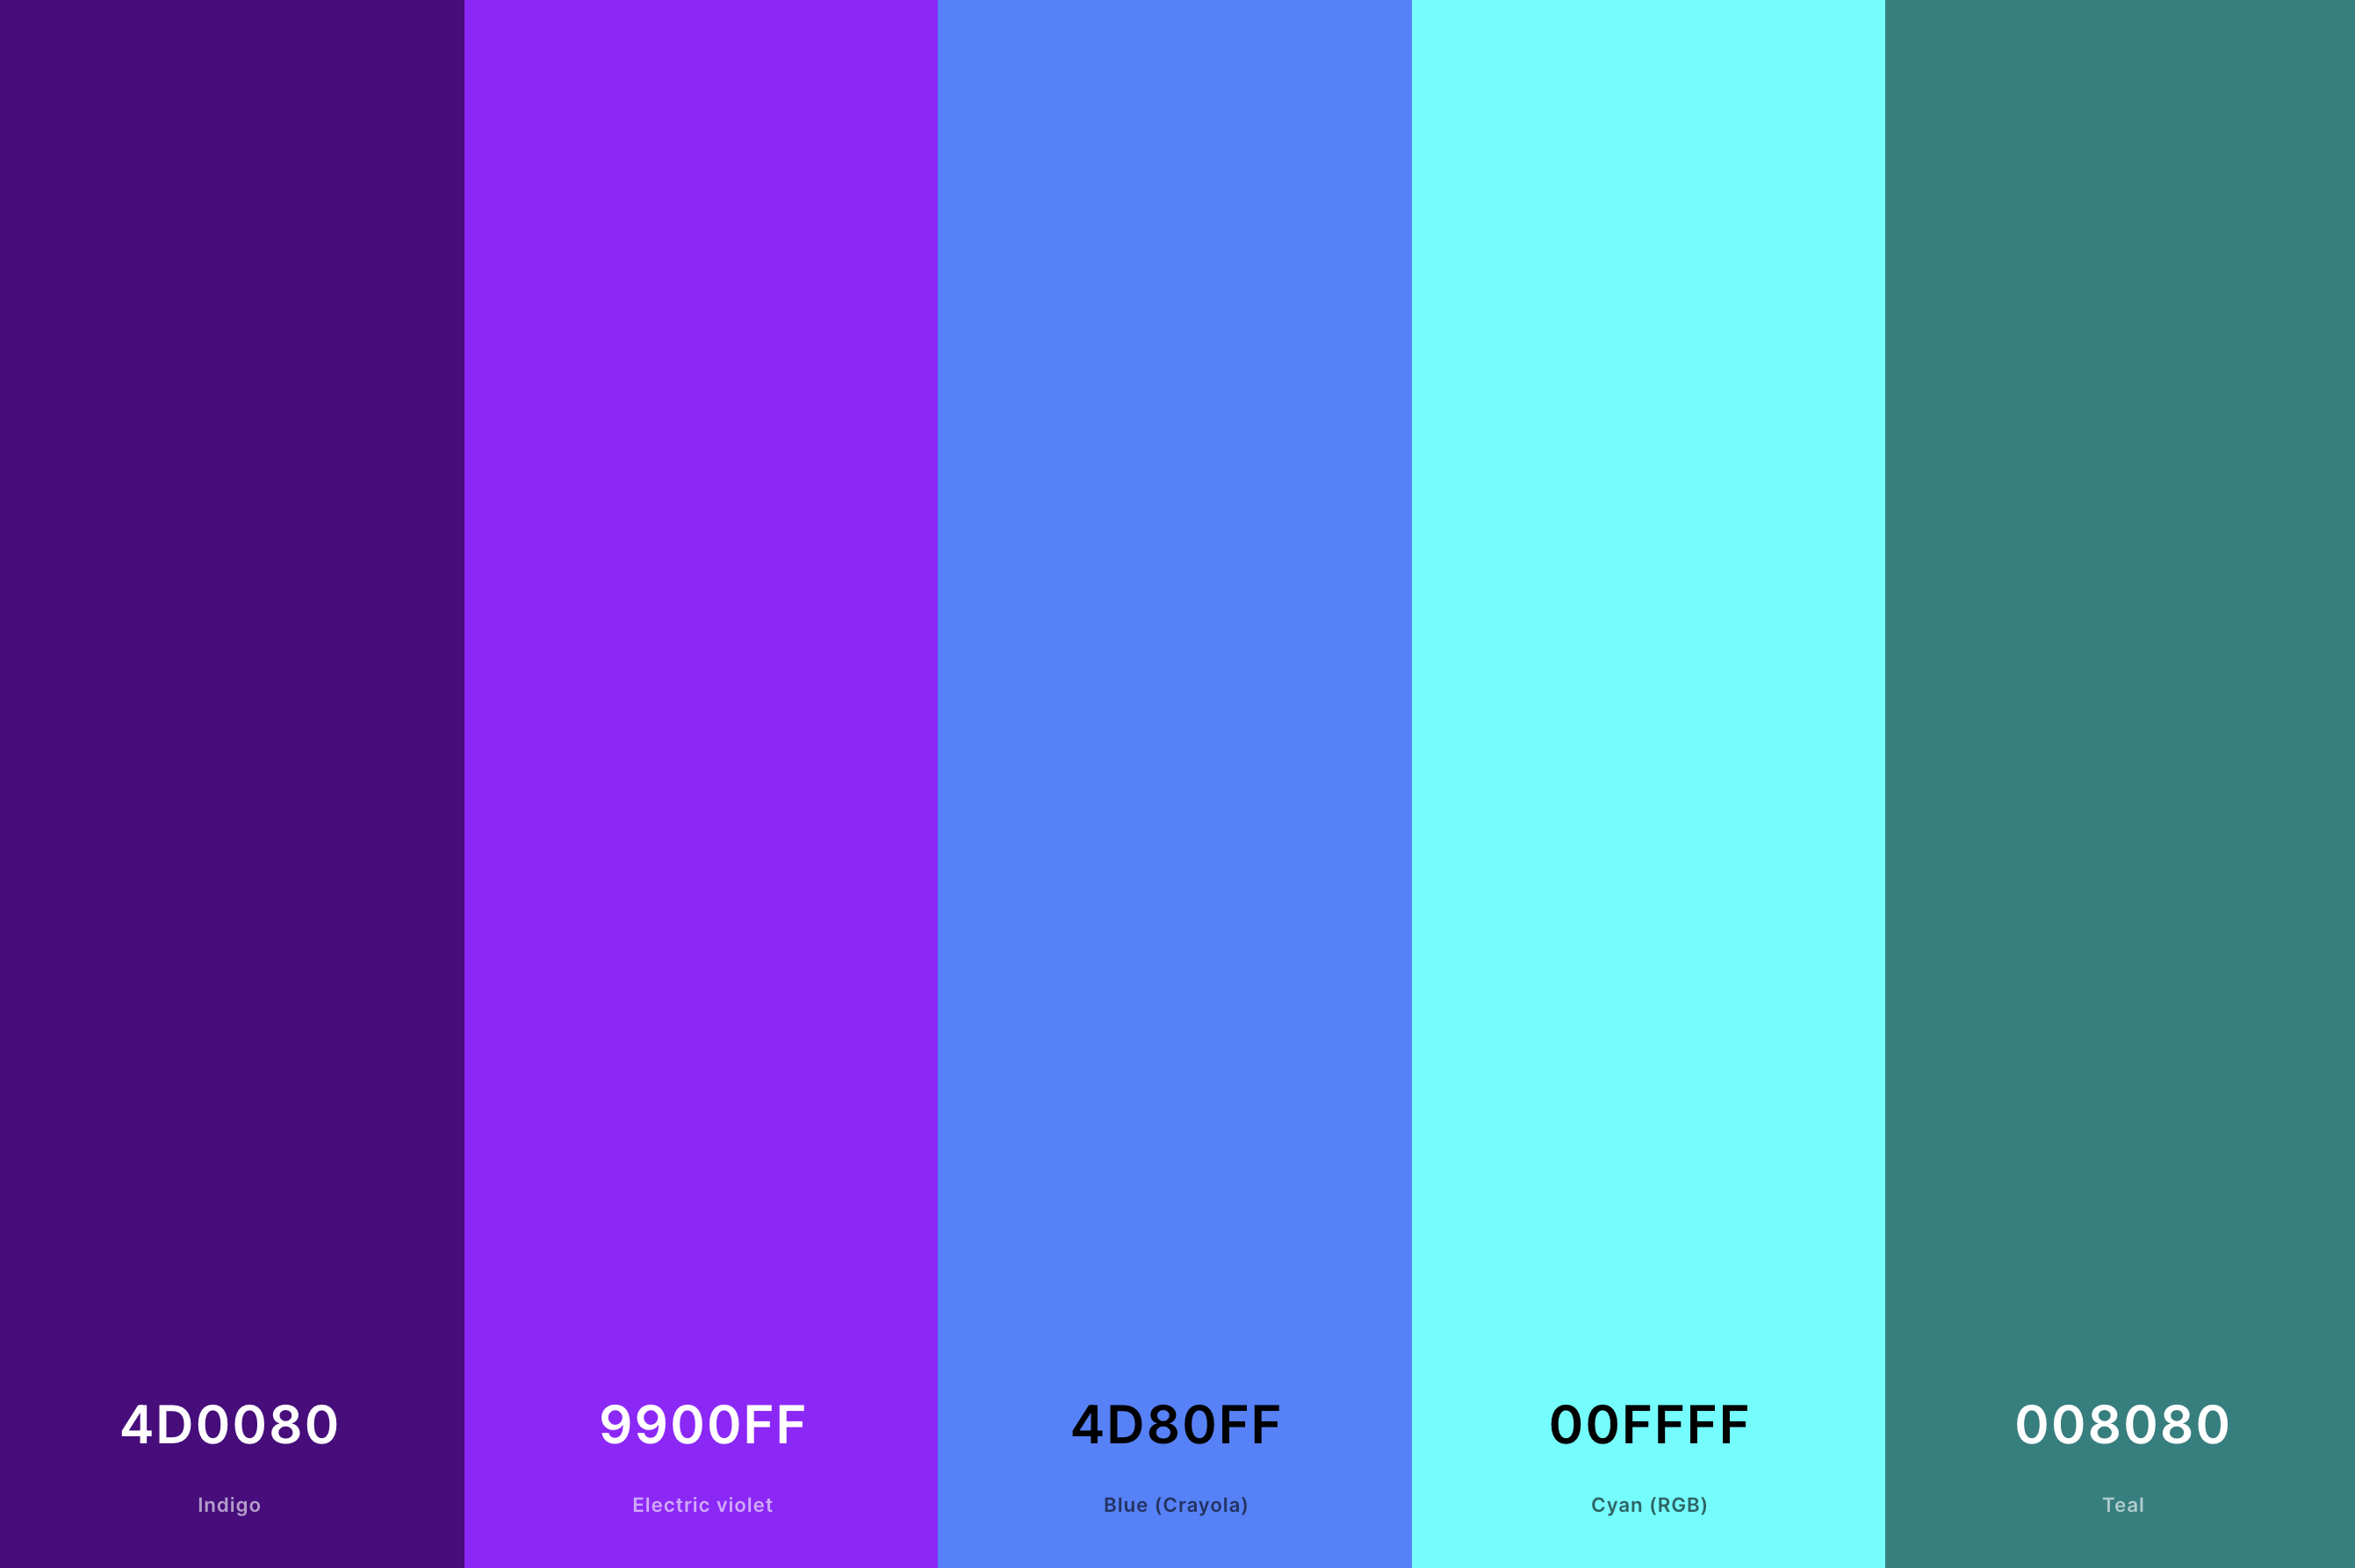 15. Violet And Teal Color Palette Color Palette with Indigo (Hex #4D0080) + Electric Violet (Hex #9900FF) + Blue (Crayola) (Hex #4D80FF) + Cyan (Rgb) (Hex #00FFFF) + Teal (Hex #008080) Color Palette with Hex Codes